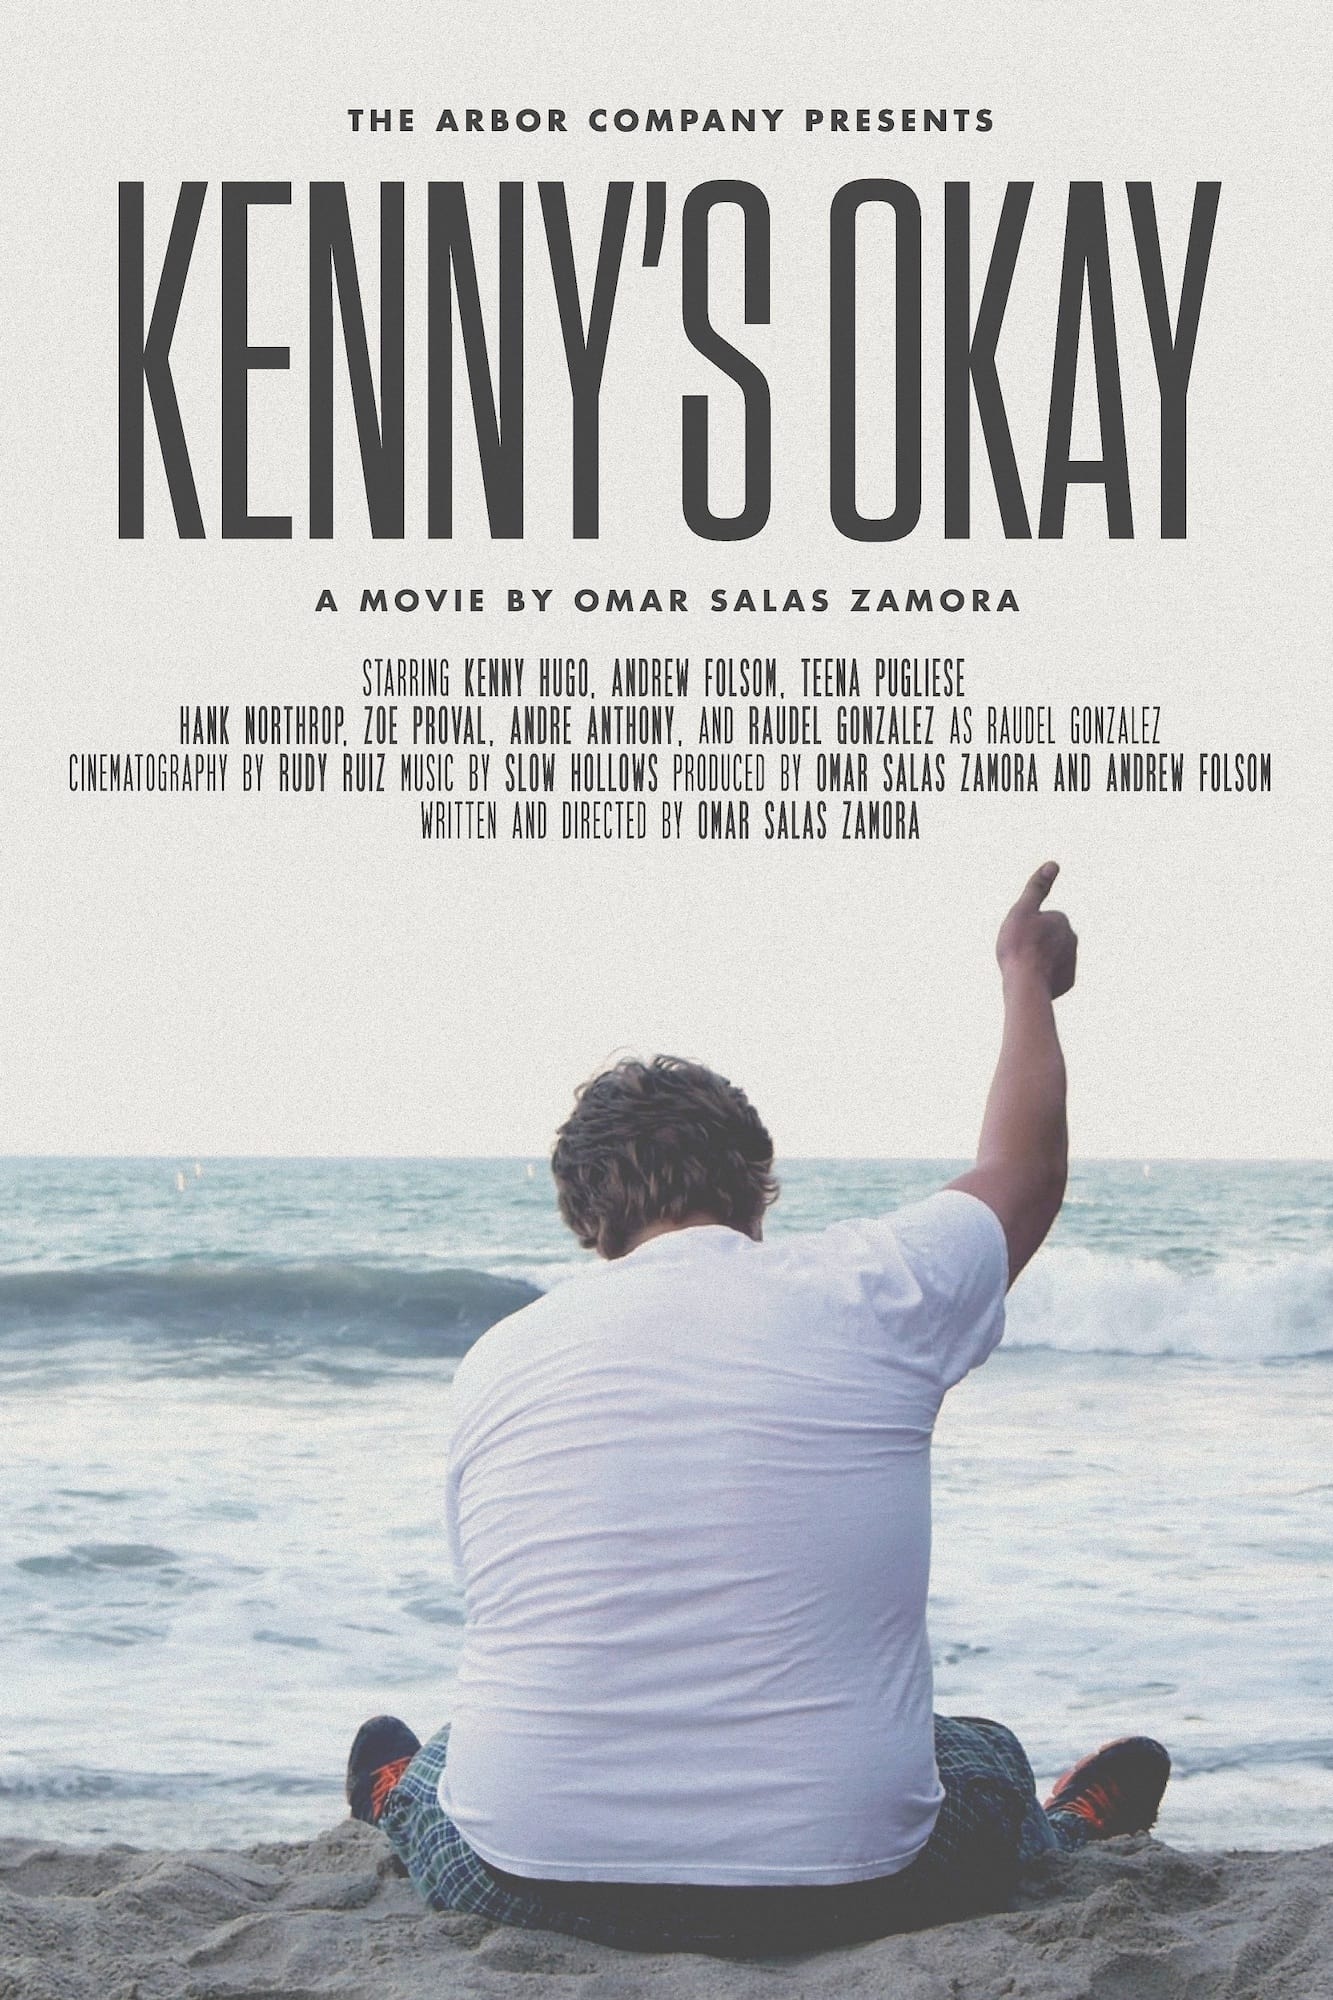 Kenny's Okay